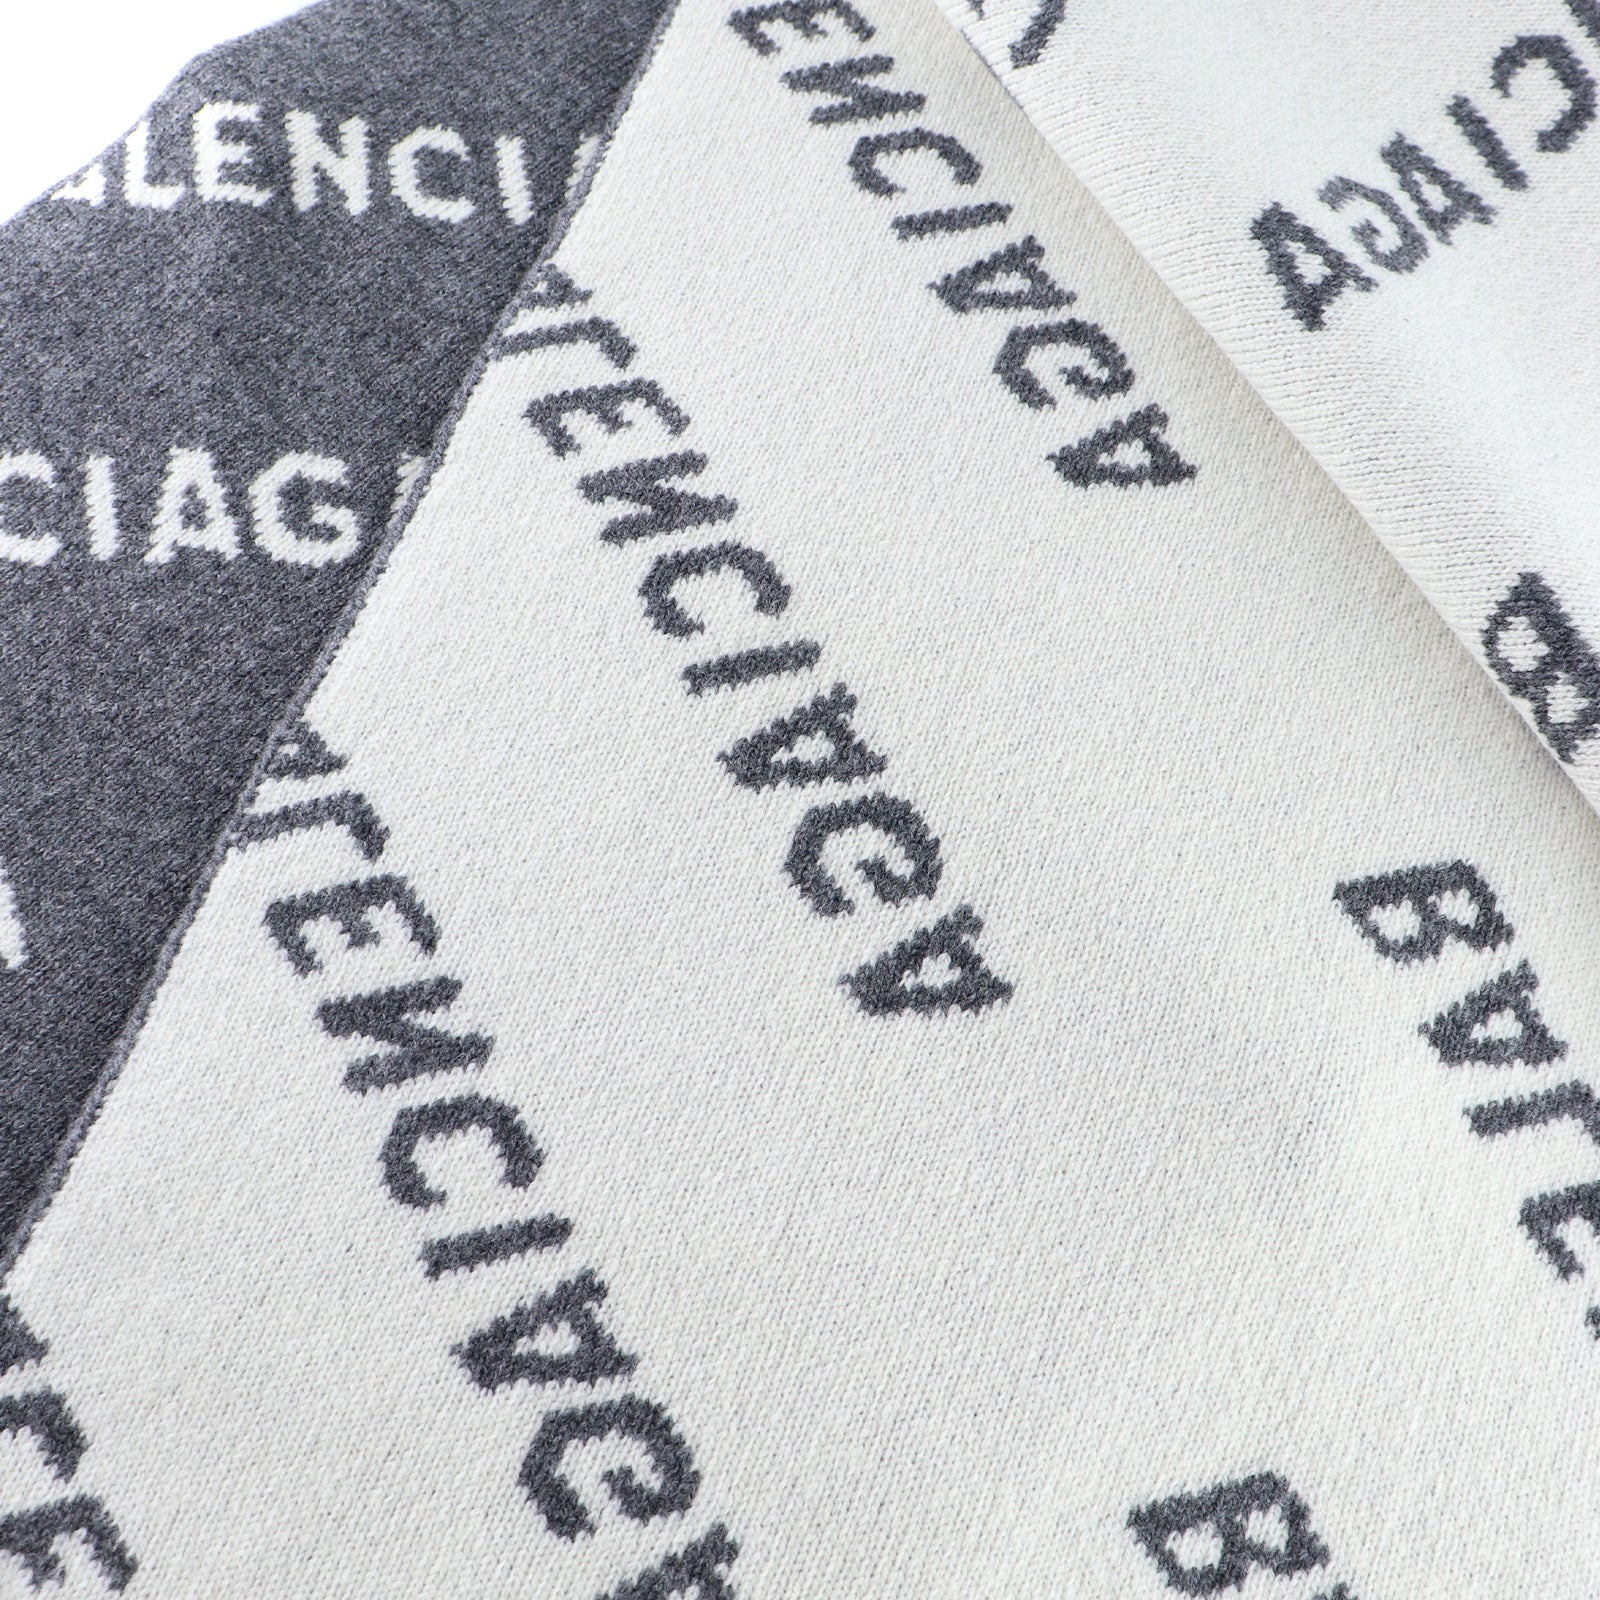 BALENCIAGA - Écharpe en laine monogrammée